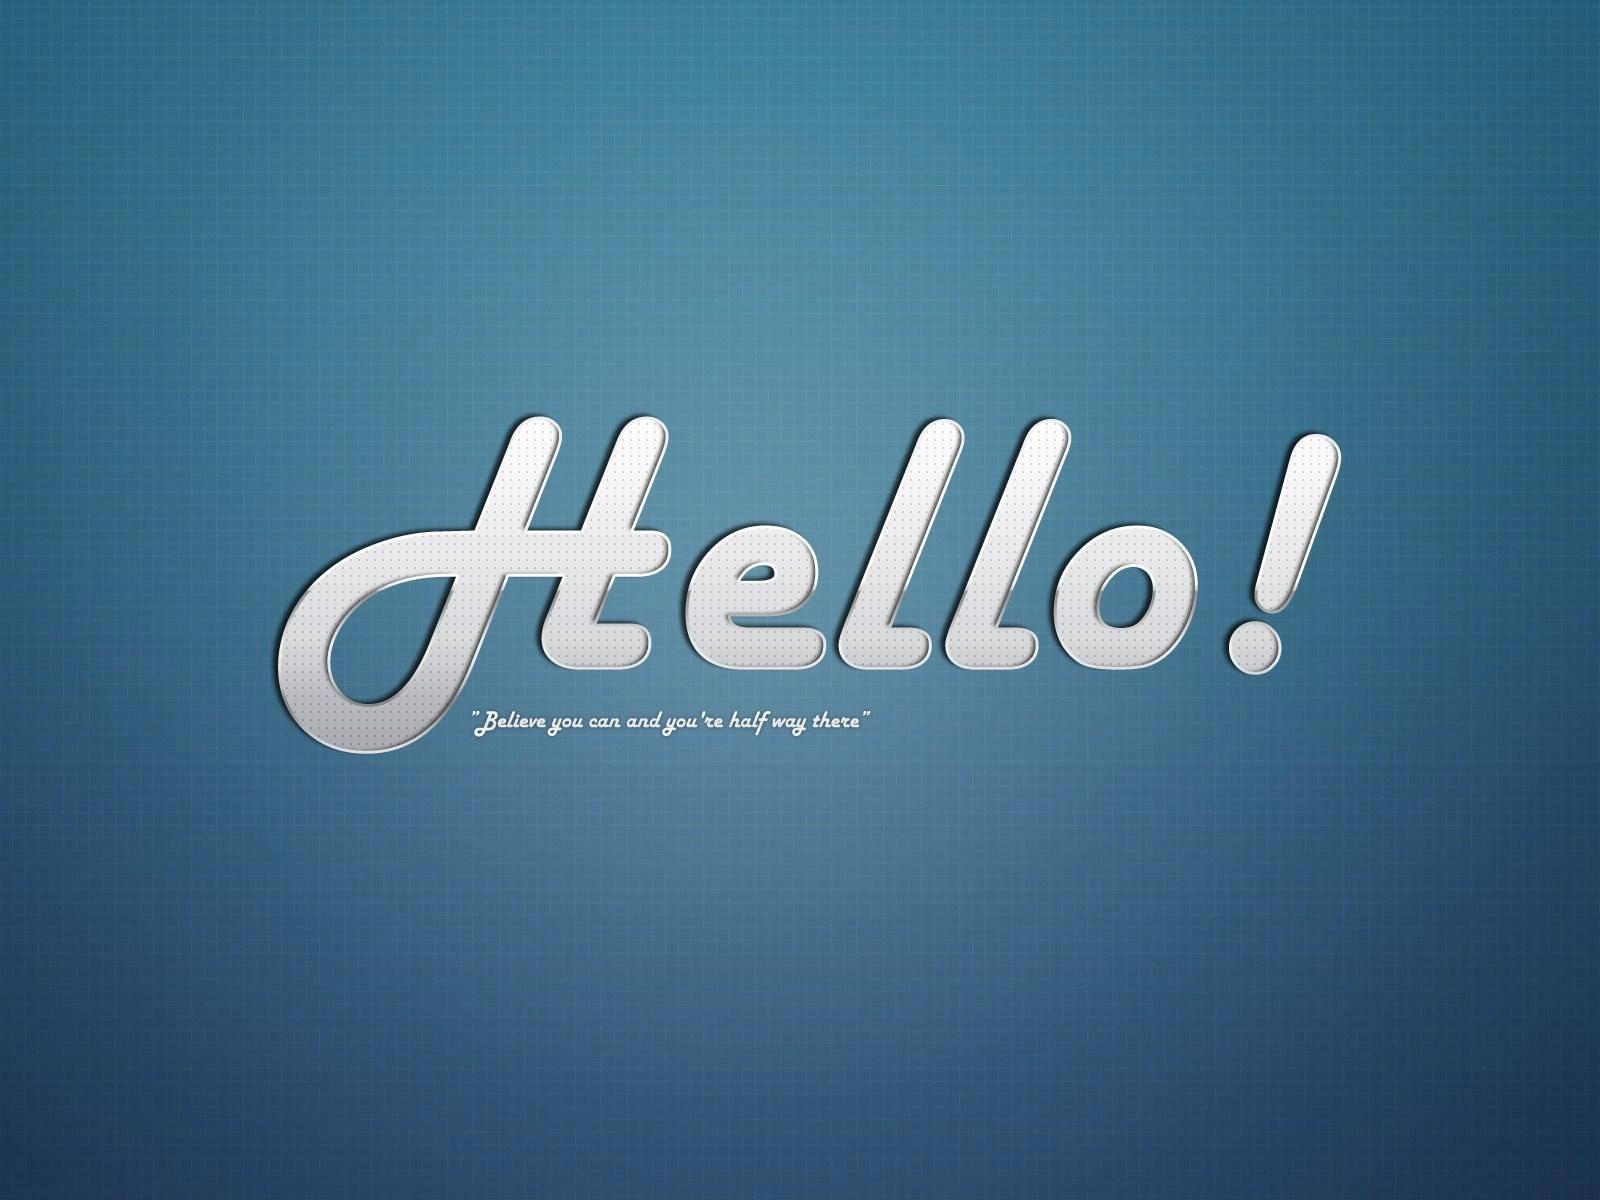 Inspirational Typography HD Wallpaper for Desktop, iPhone